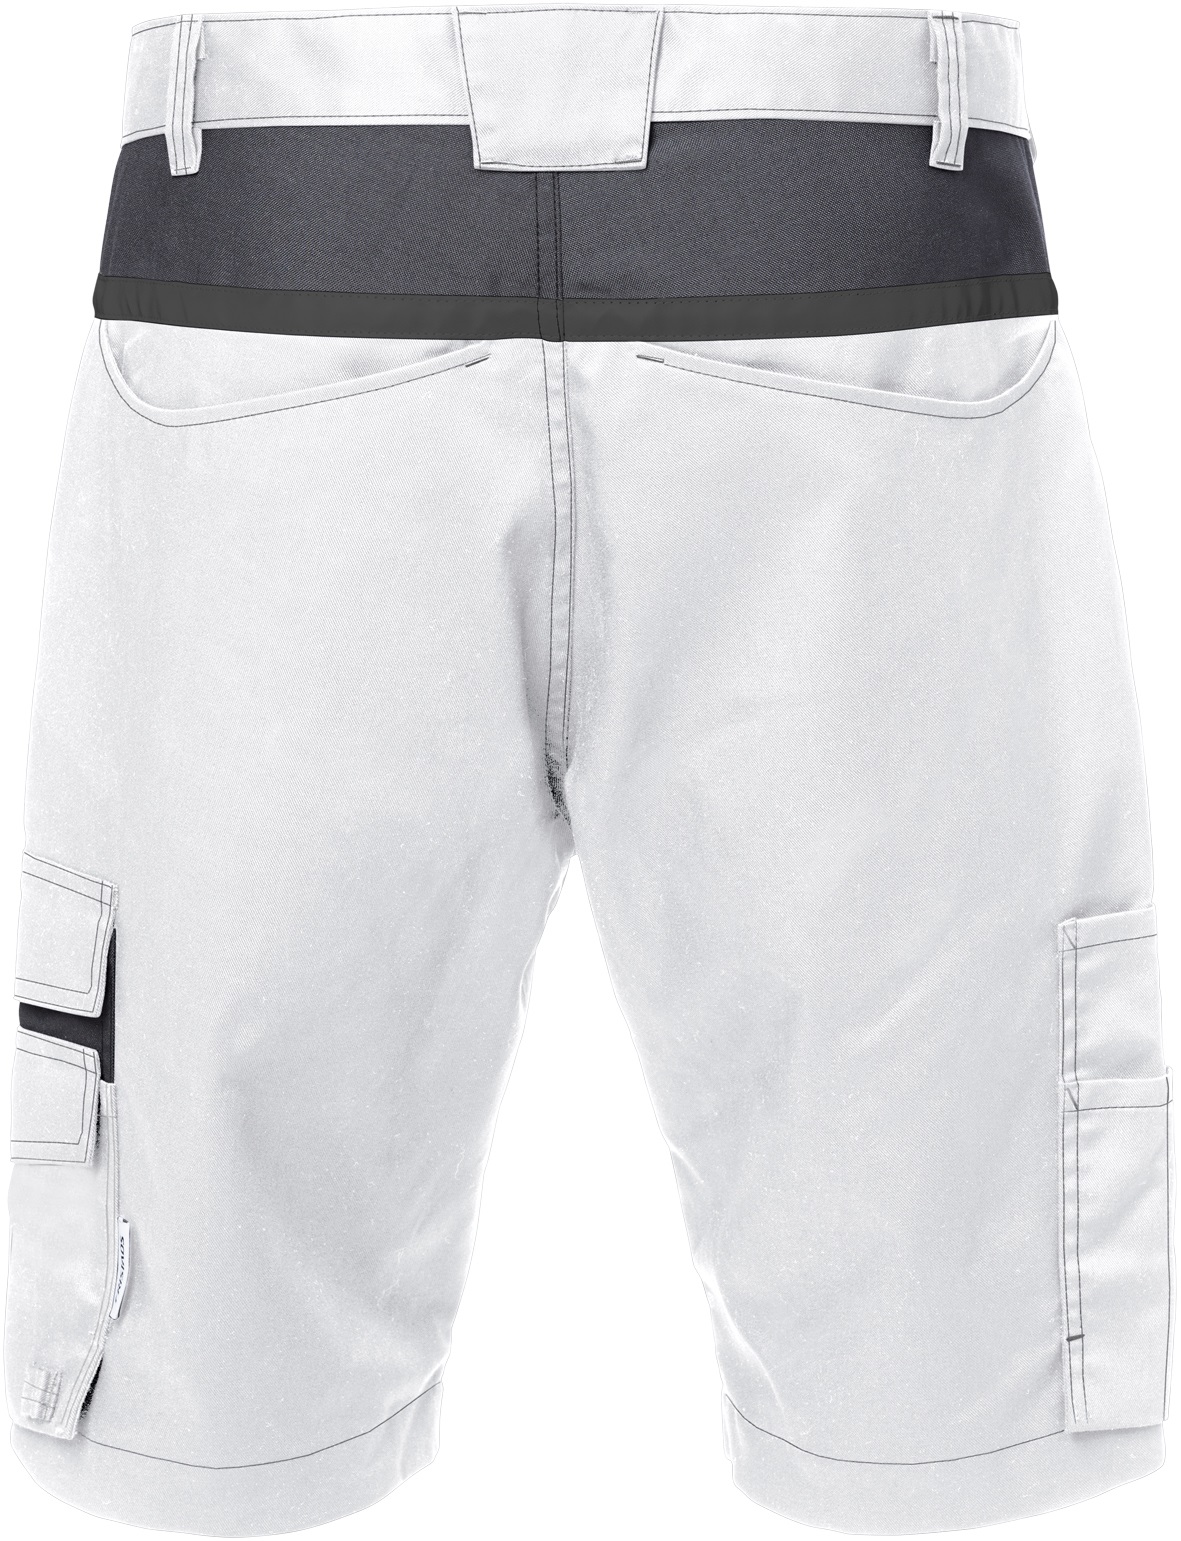 FRISTADS Shorts 2562 STFP - Weiß/Grau